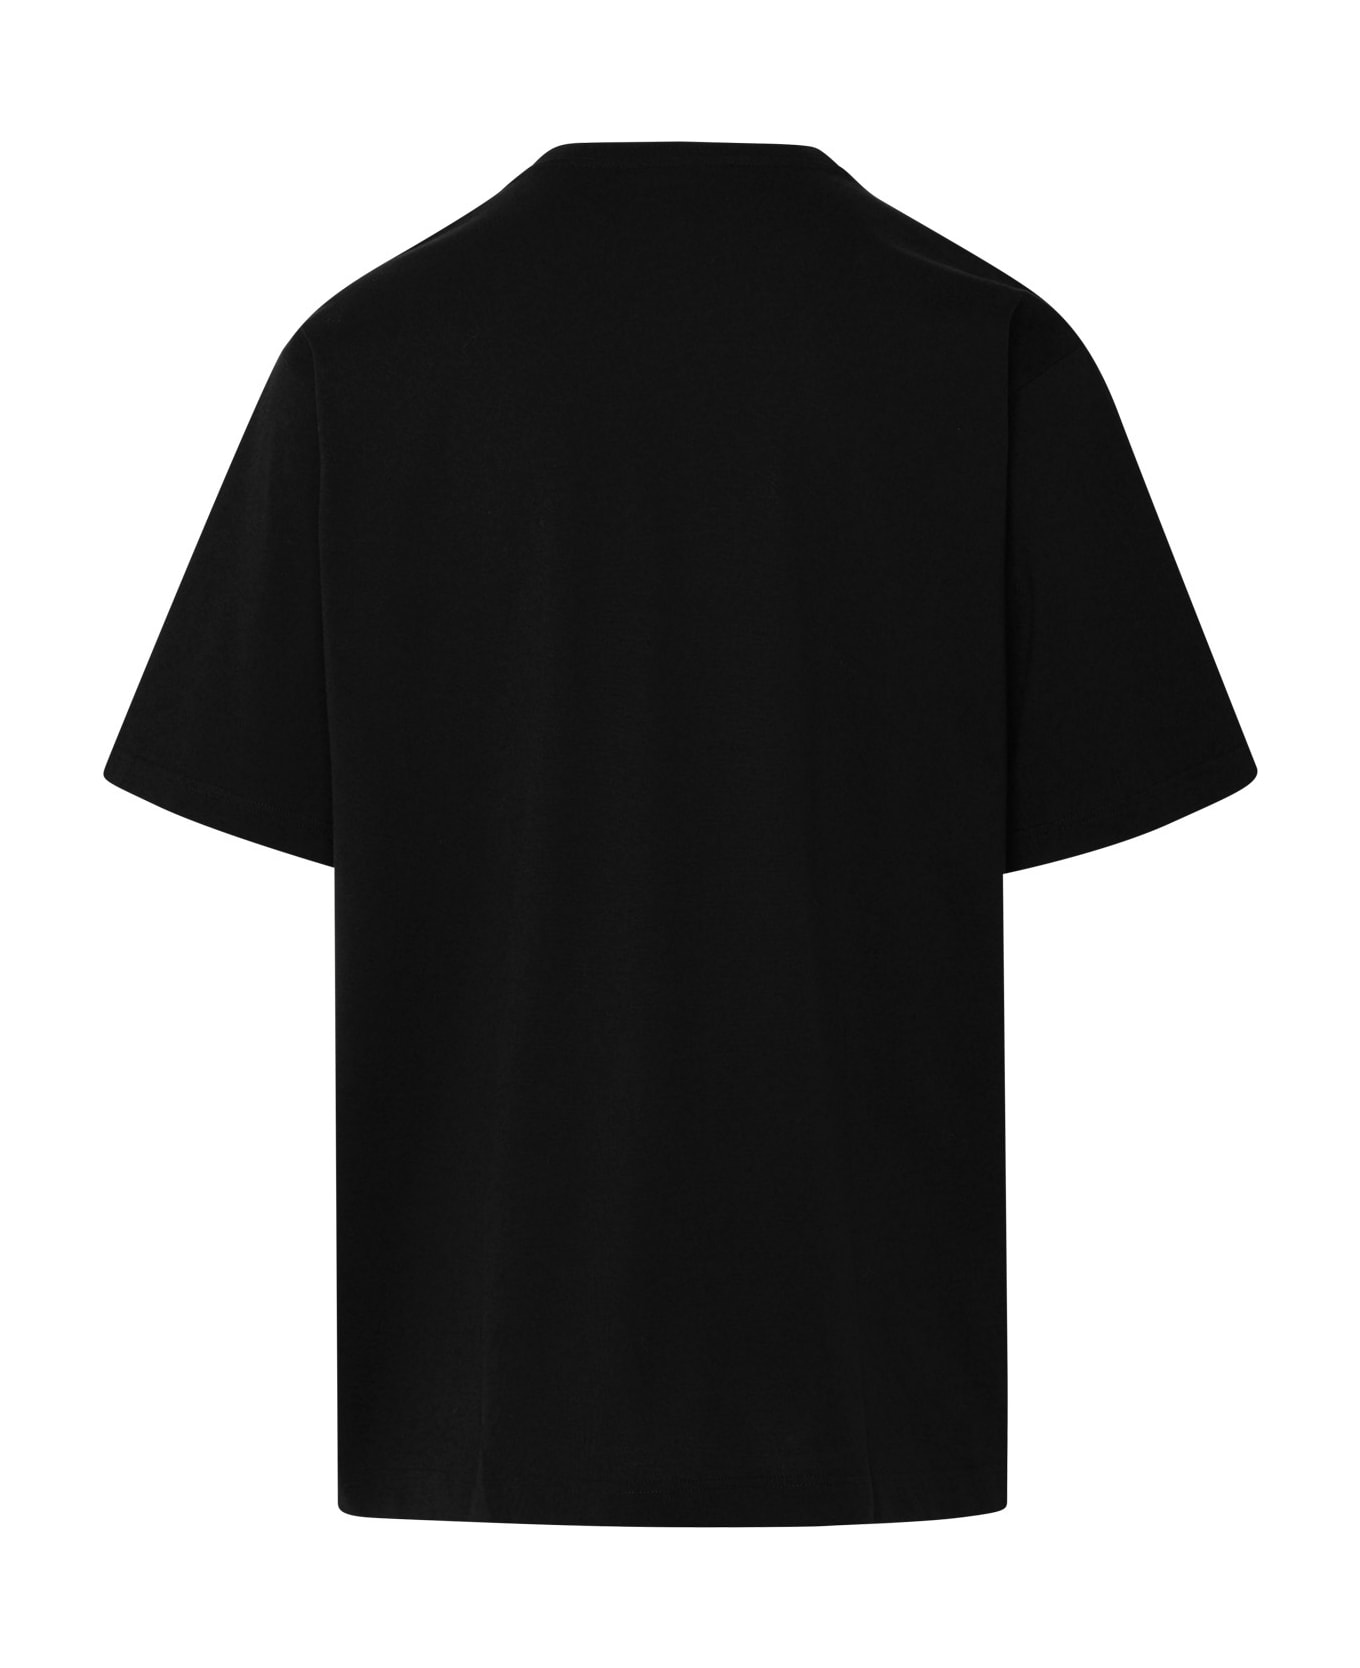 Dolce & Gabbana Black Cotton T-shirt - Nero